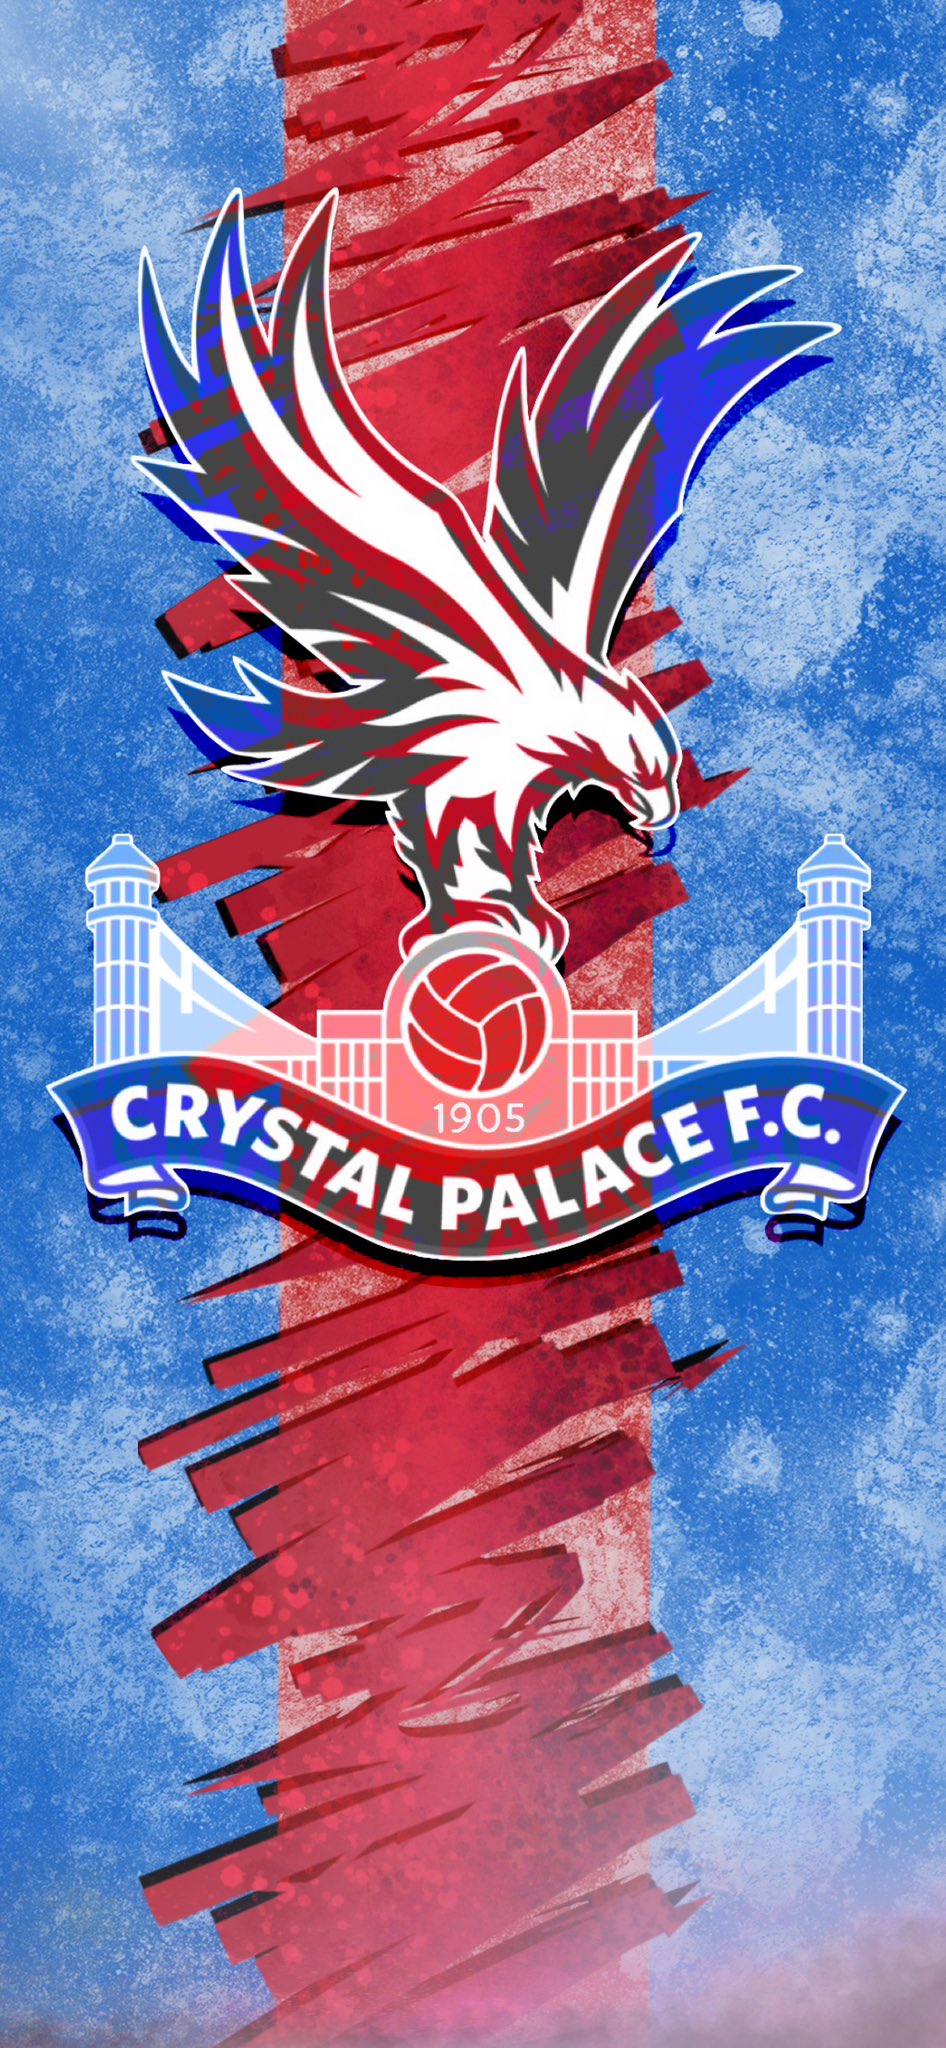 Crystal Palace F.C